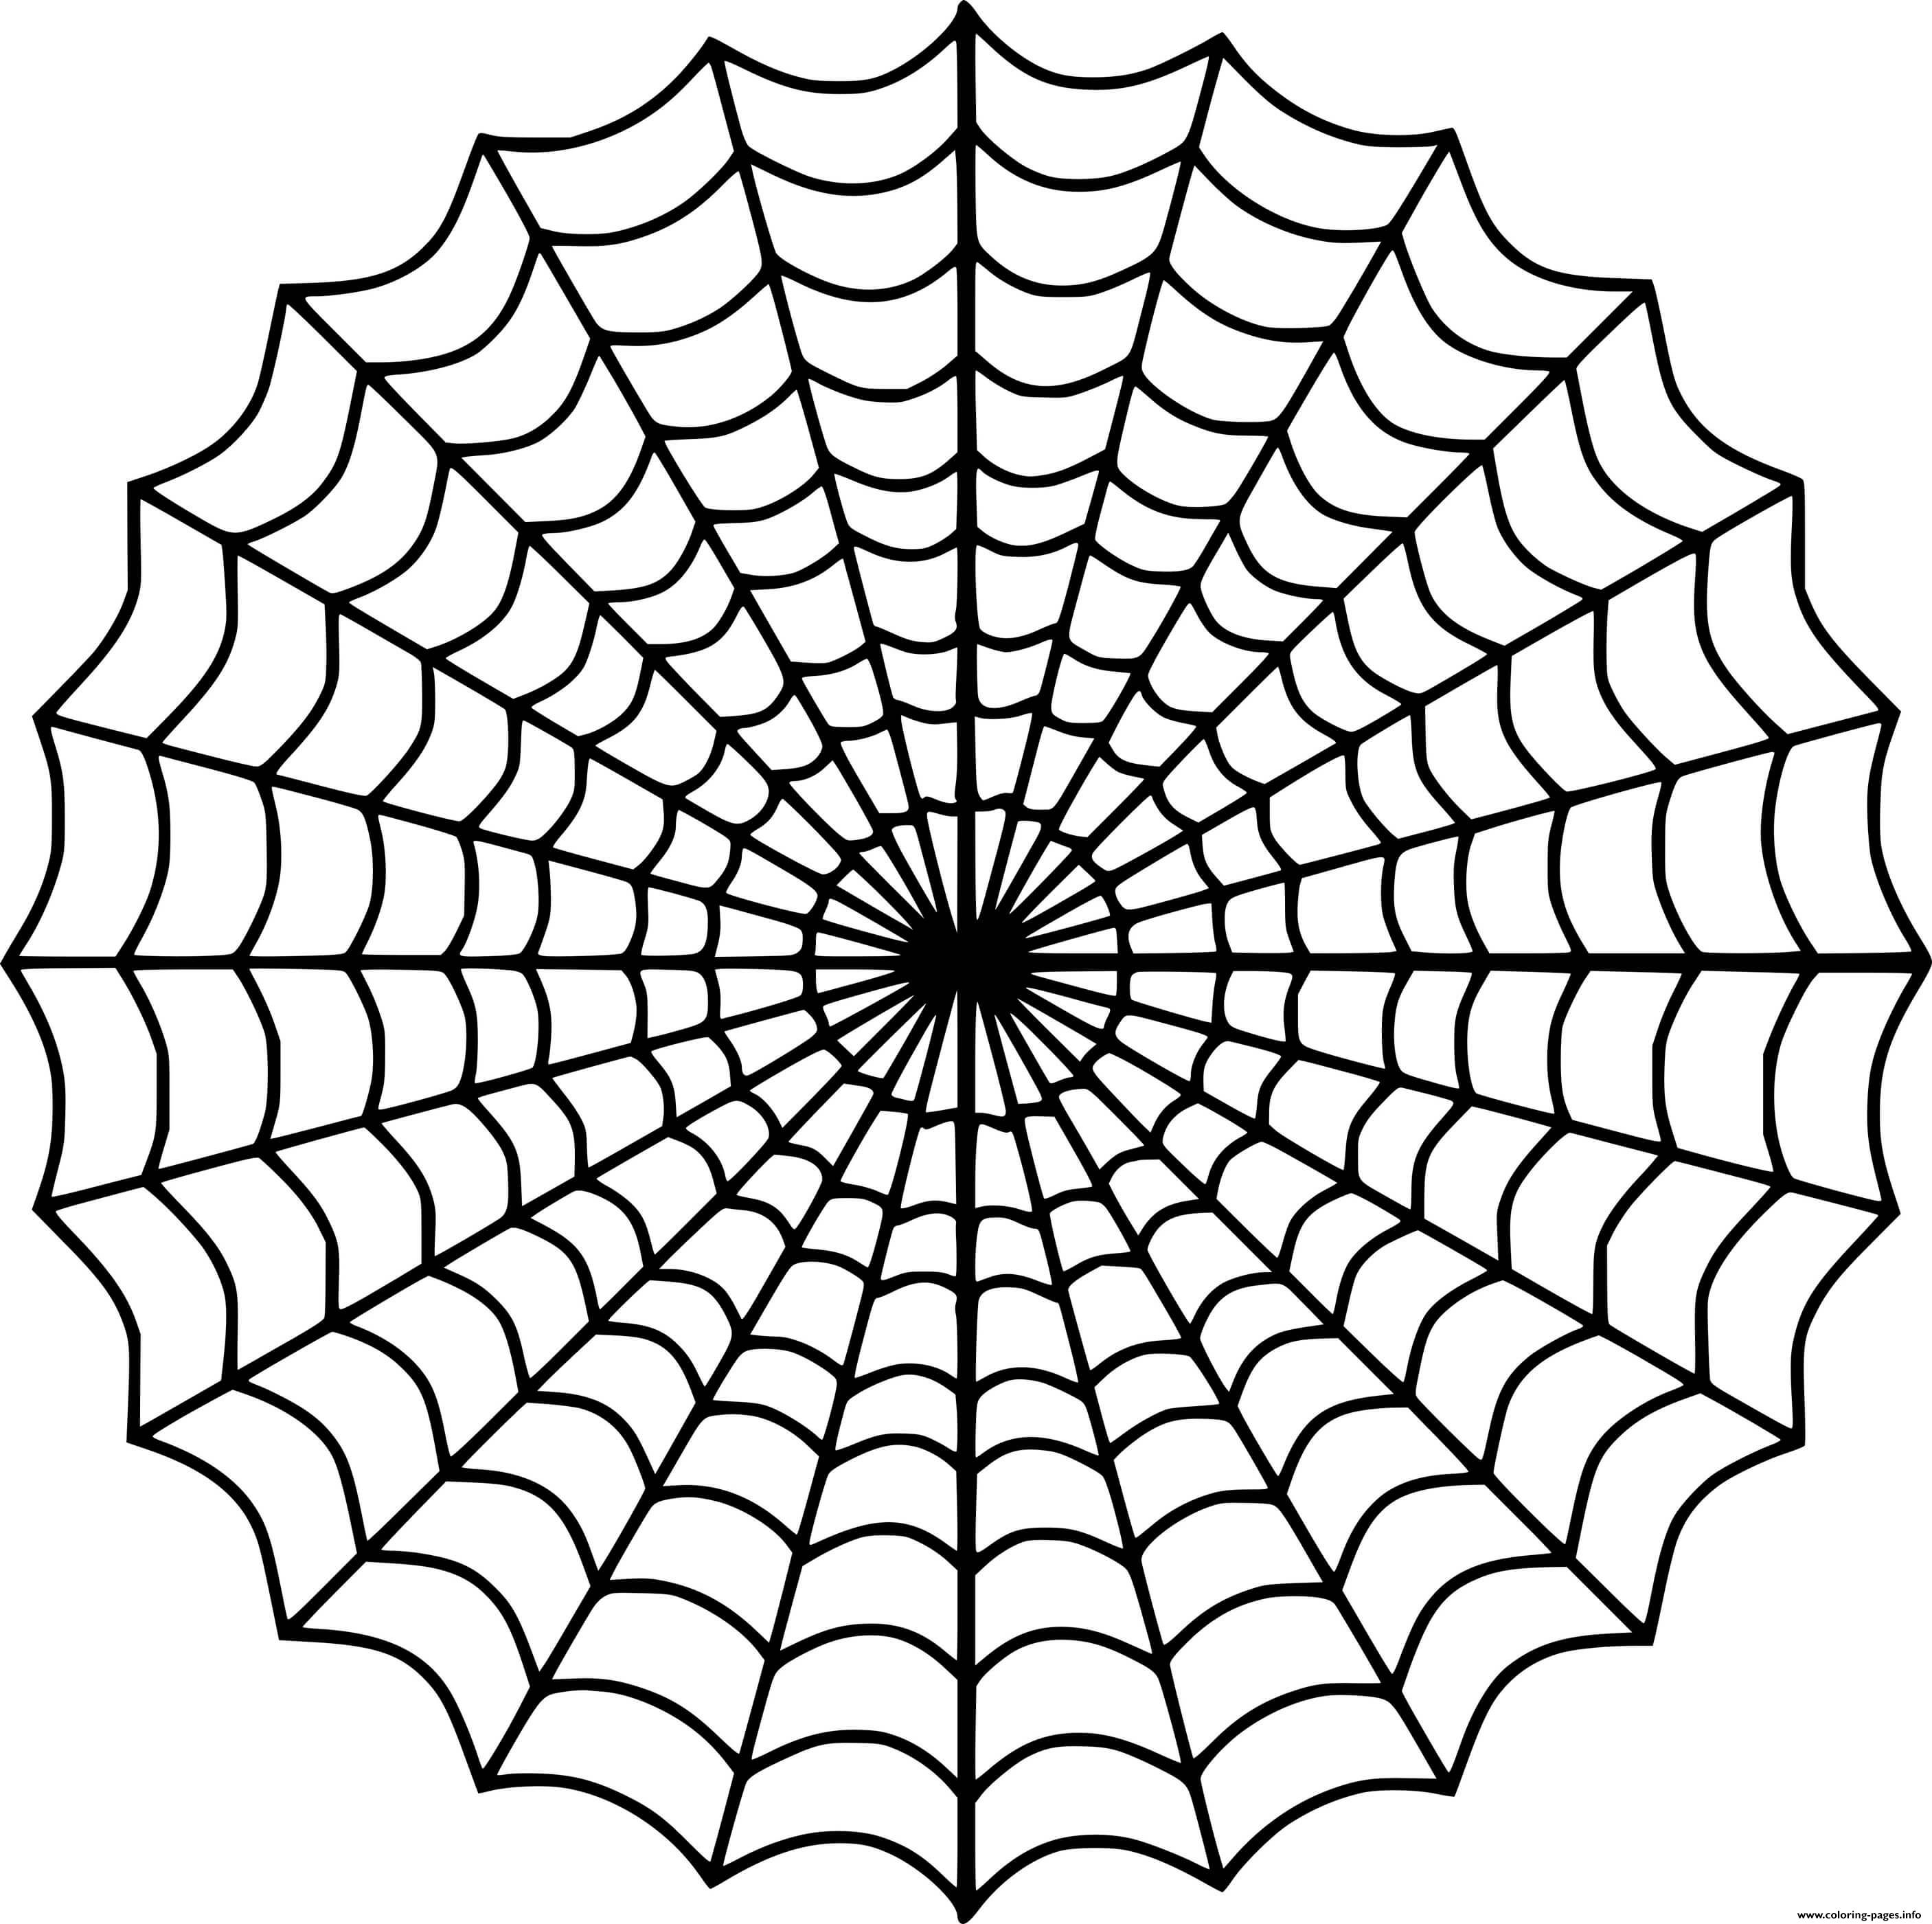 Symmetric Spider Web coloring